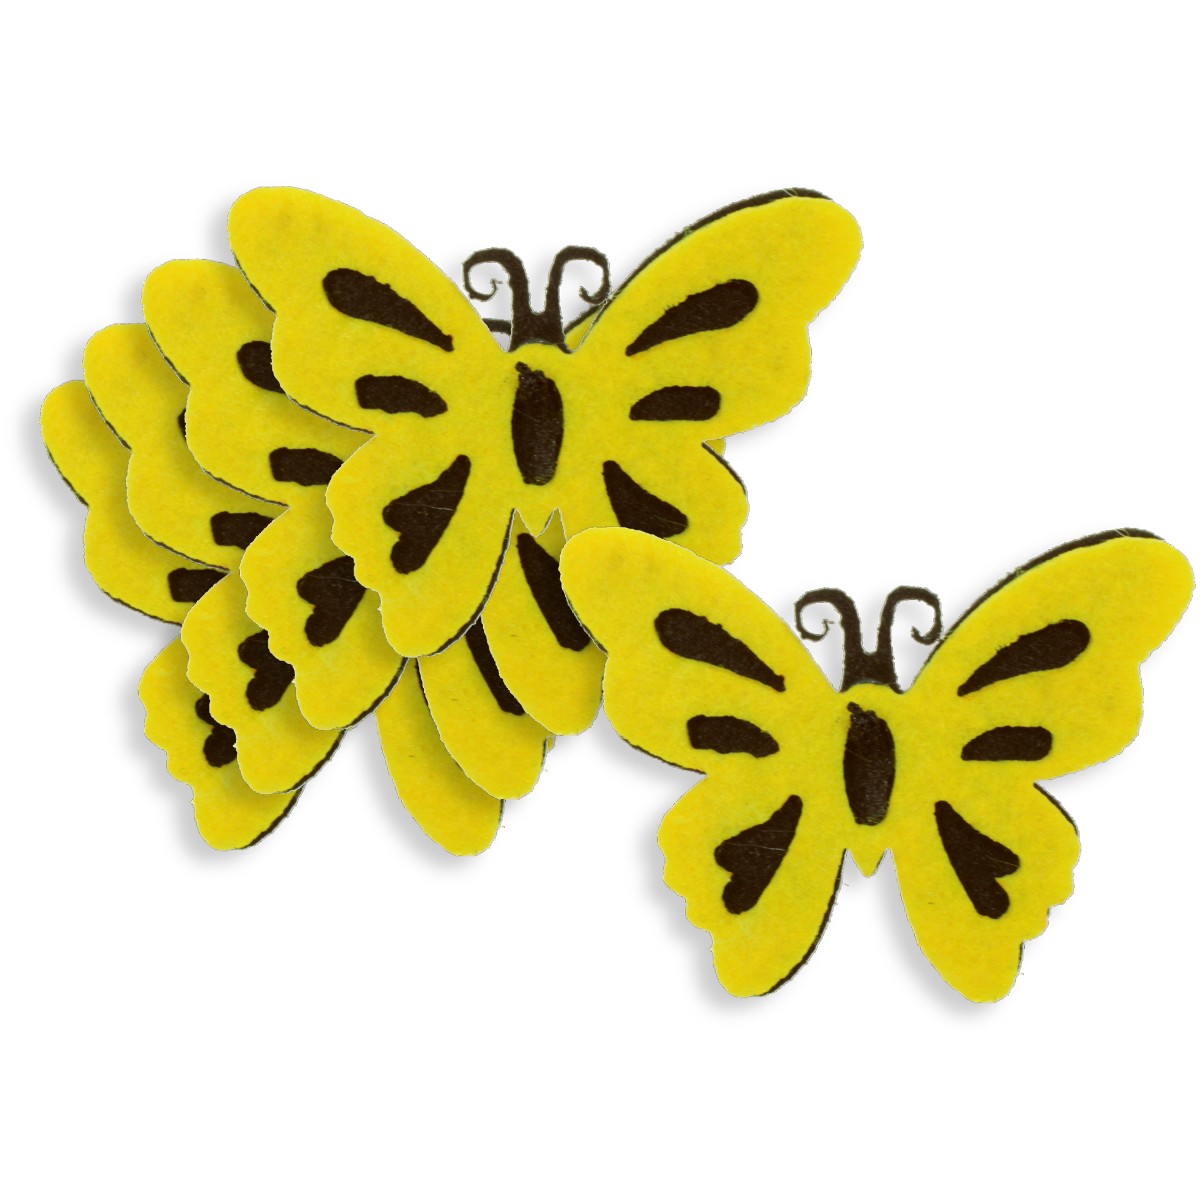 Fluture pasla galben negru 6 5x4 8cm 5 set